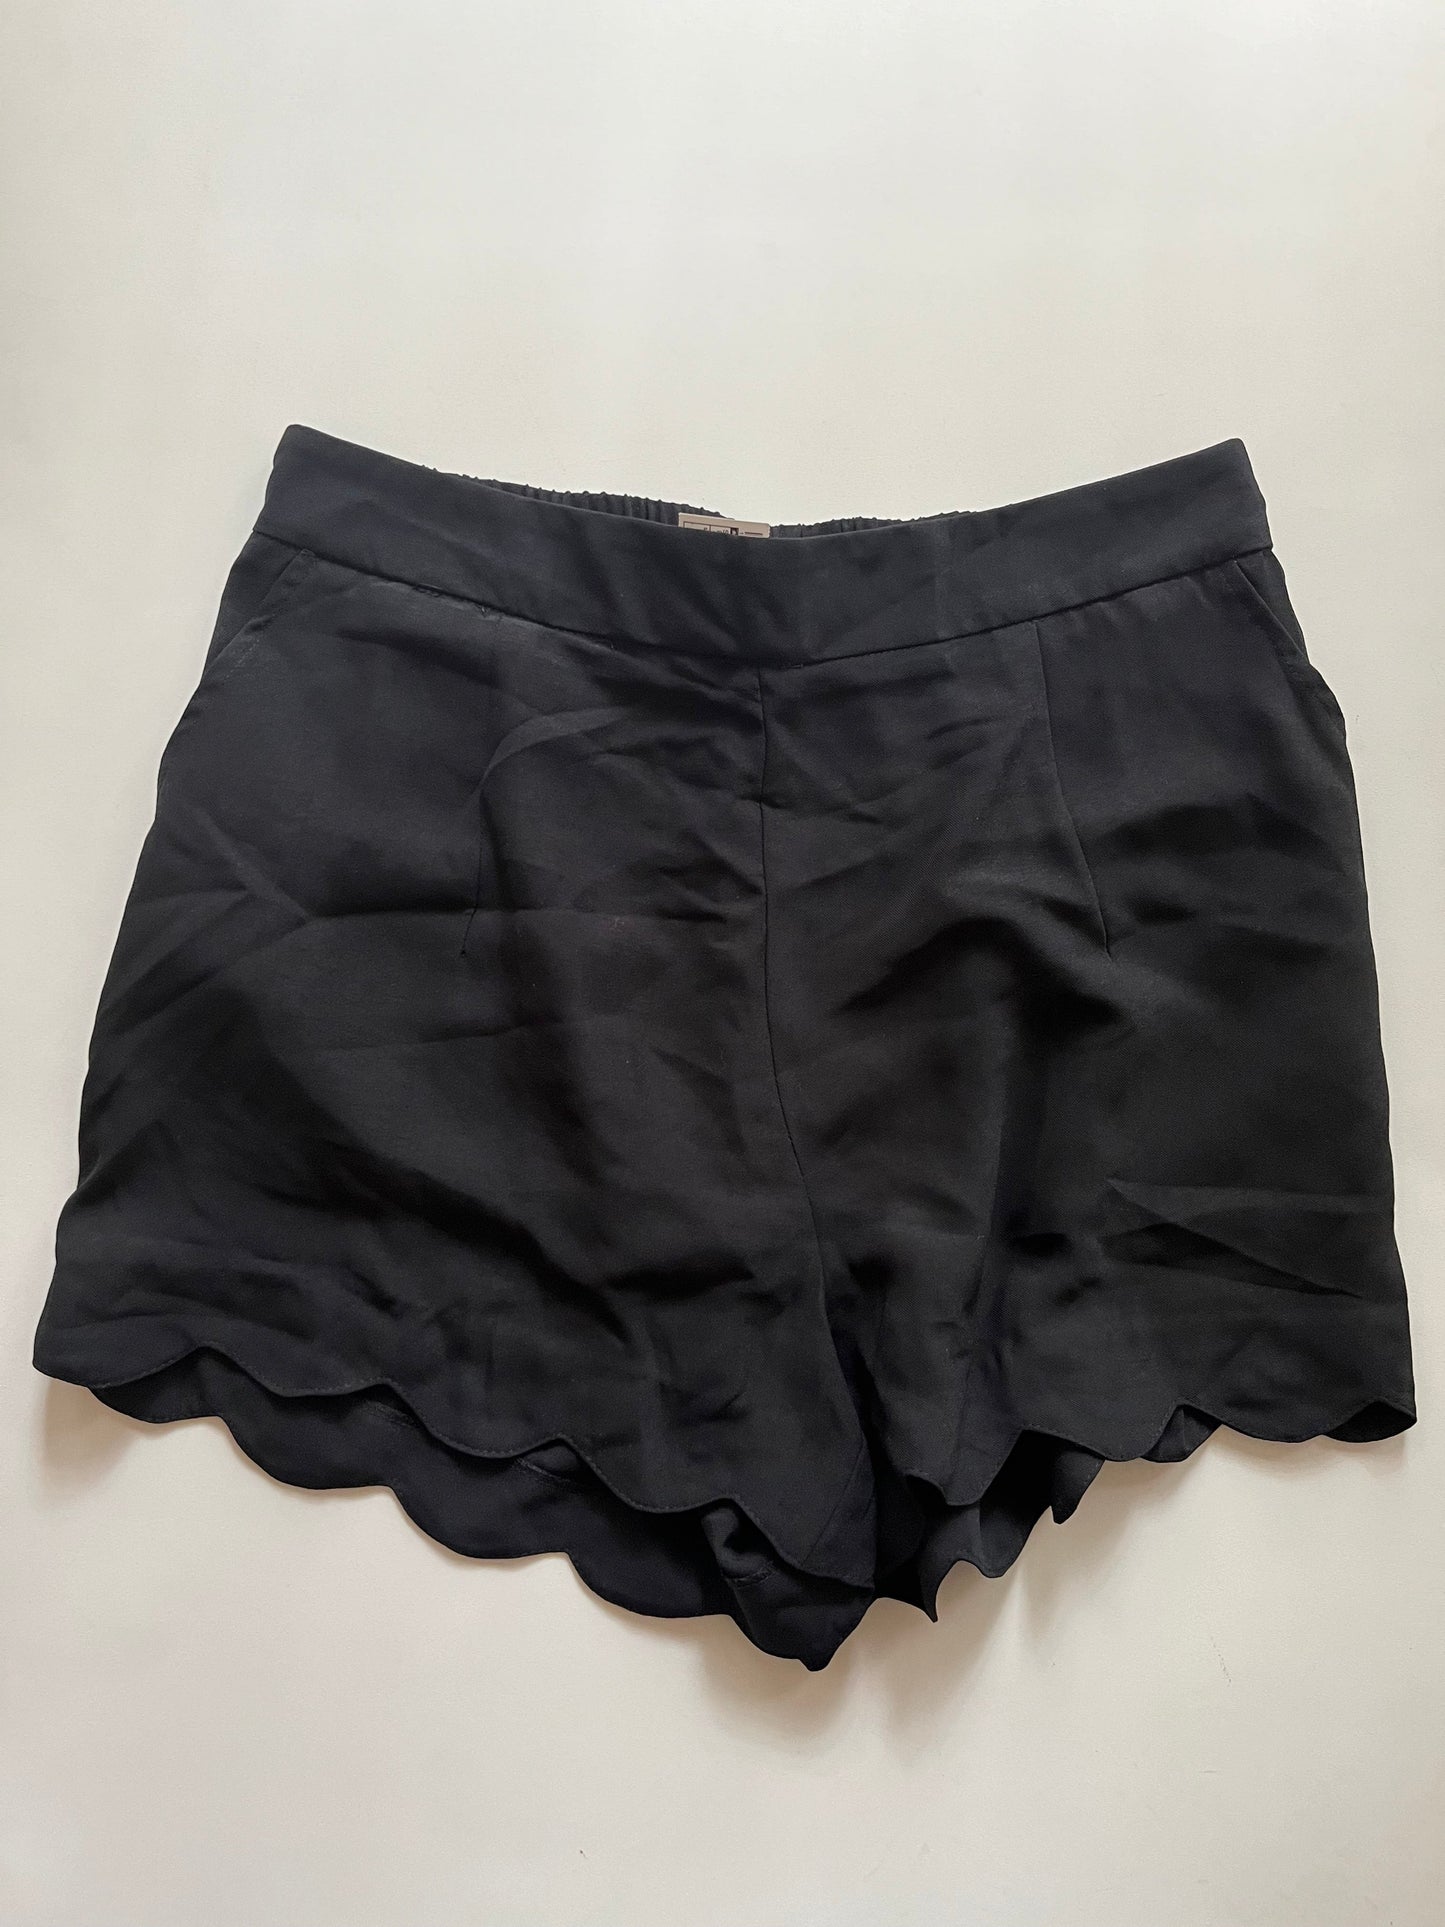 Black Shorts Jodifl, Size 12